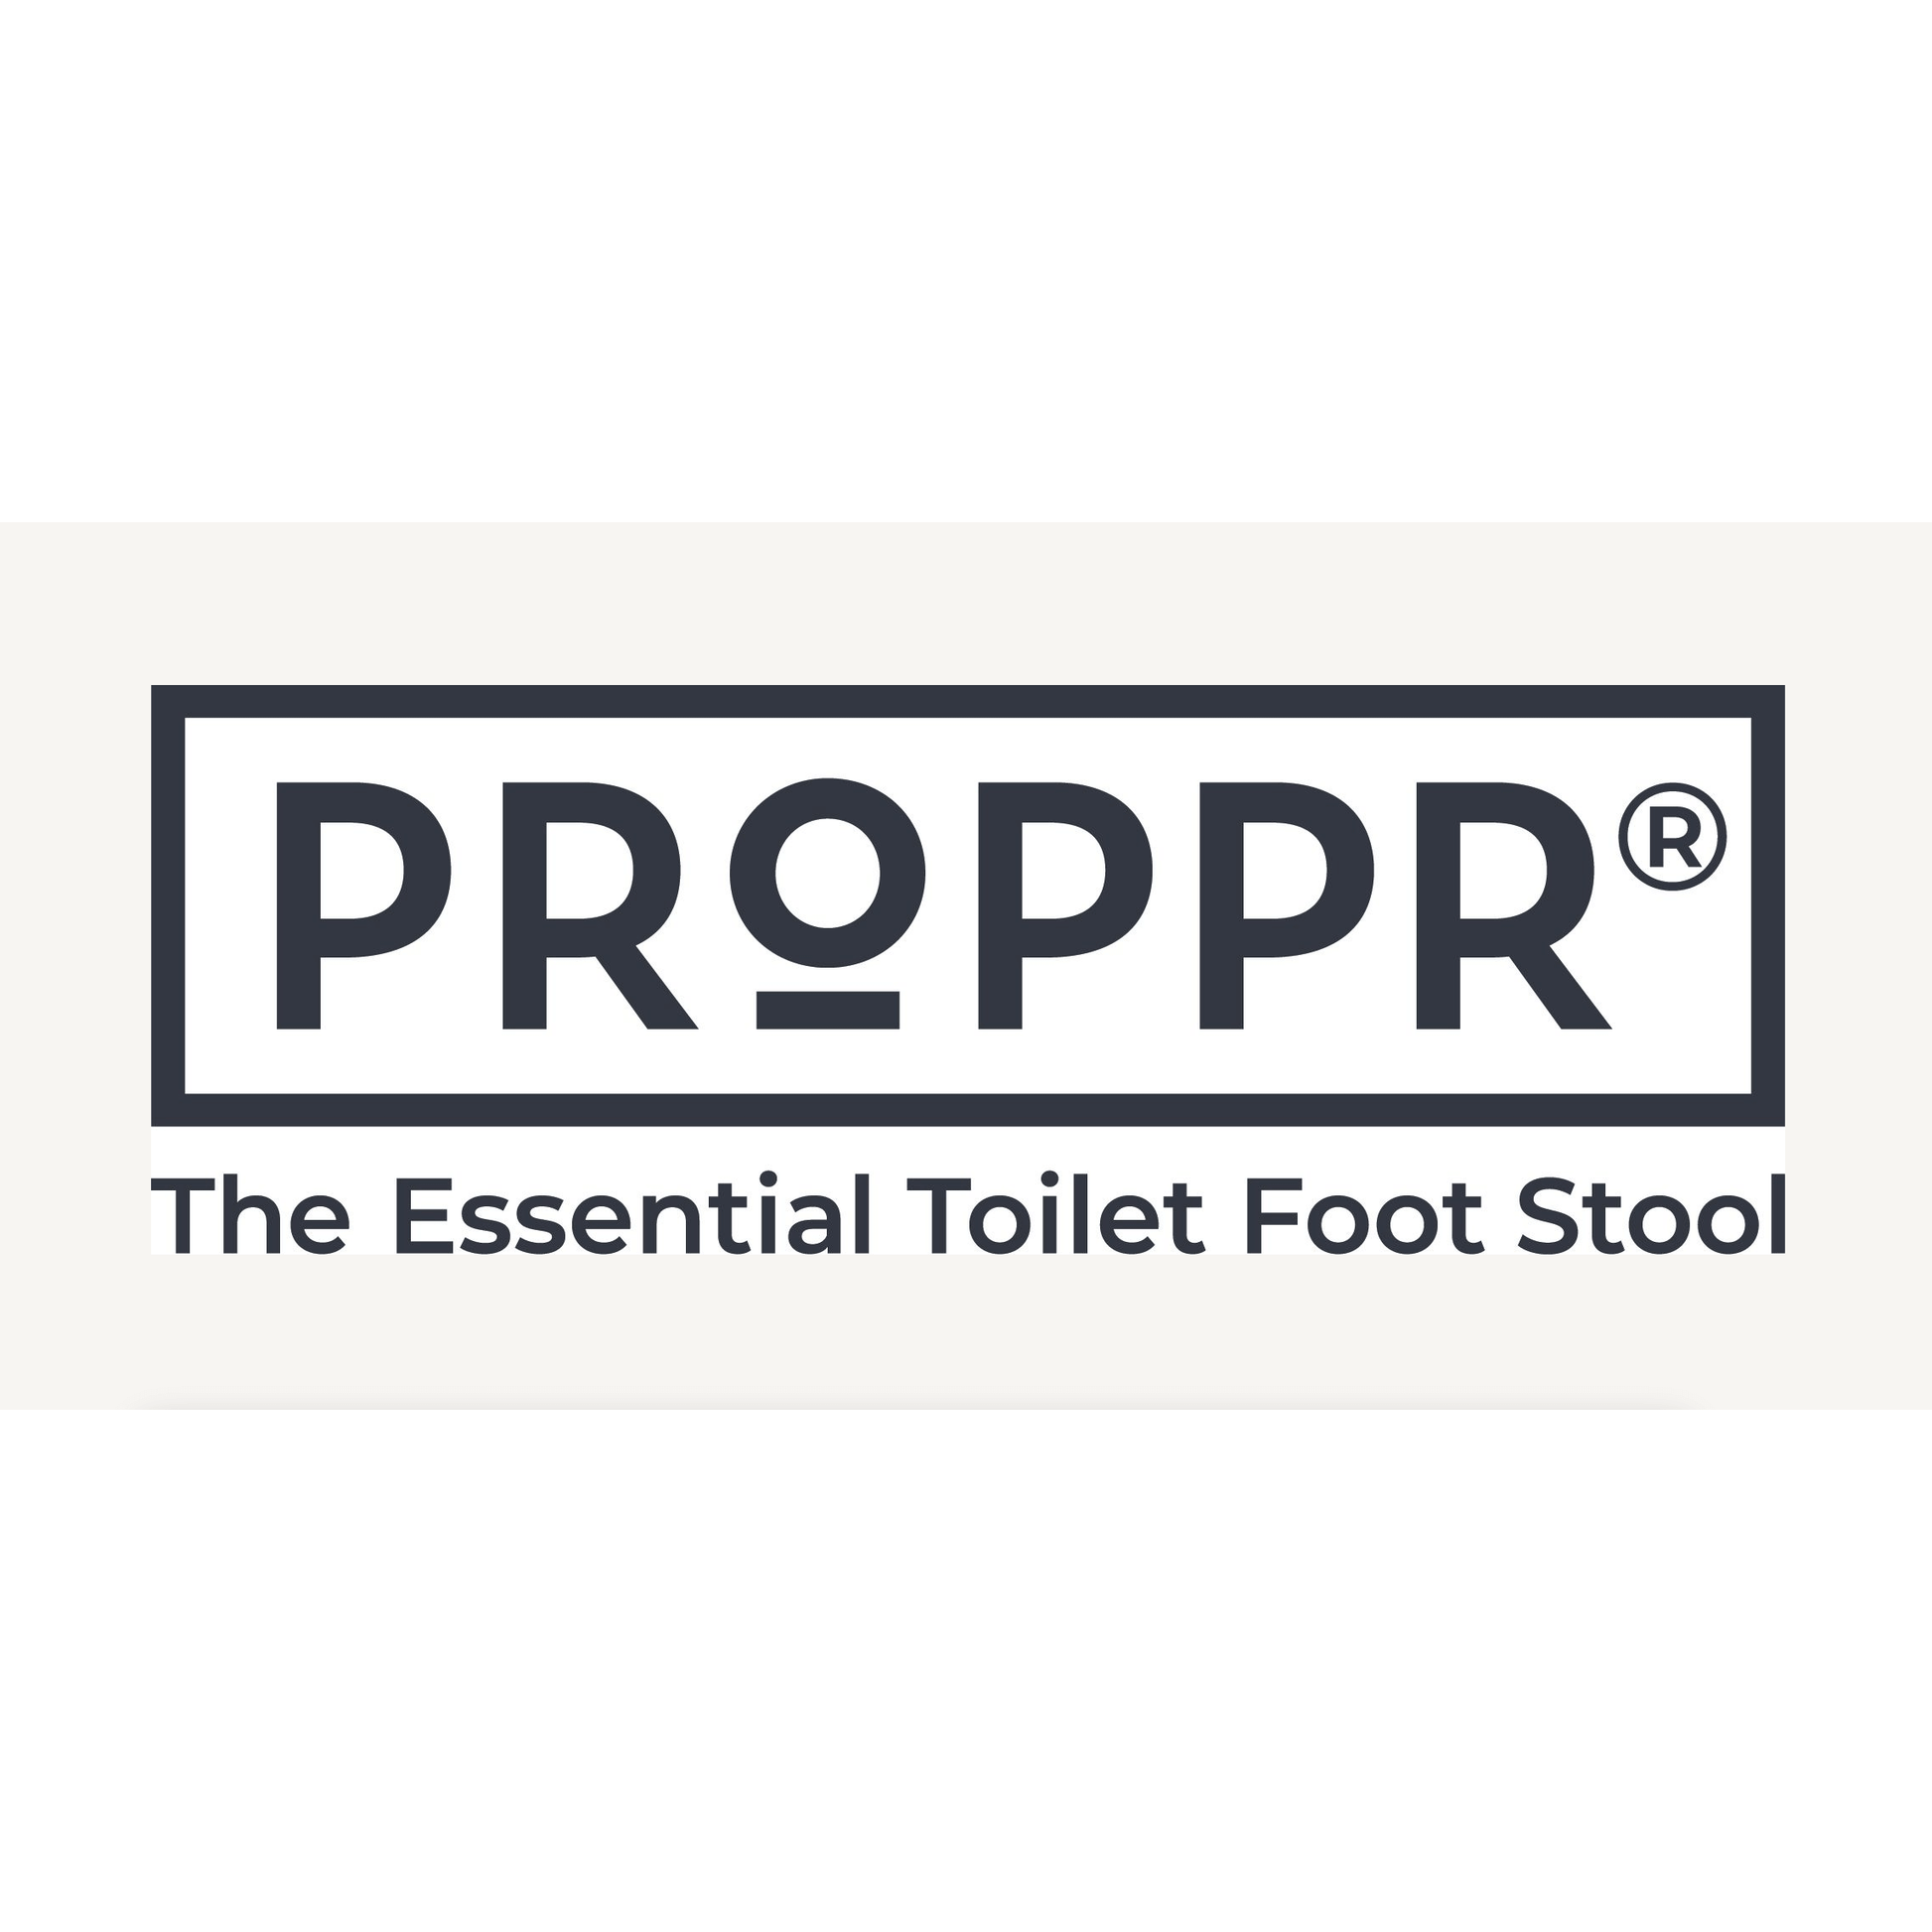 The PROPPR Acer - Black Toilet Foot Stool - Proppr logo